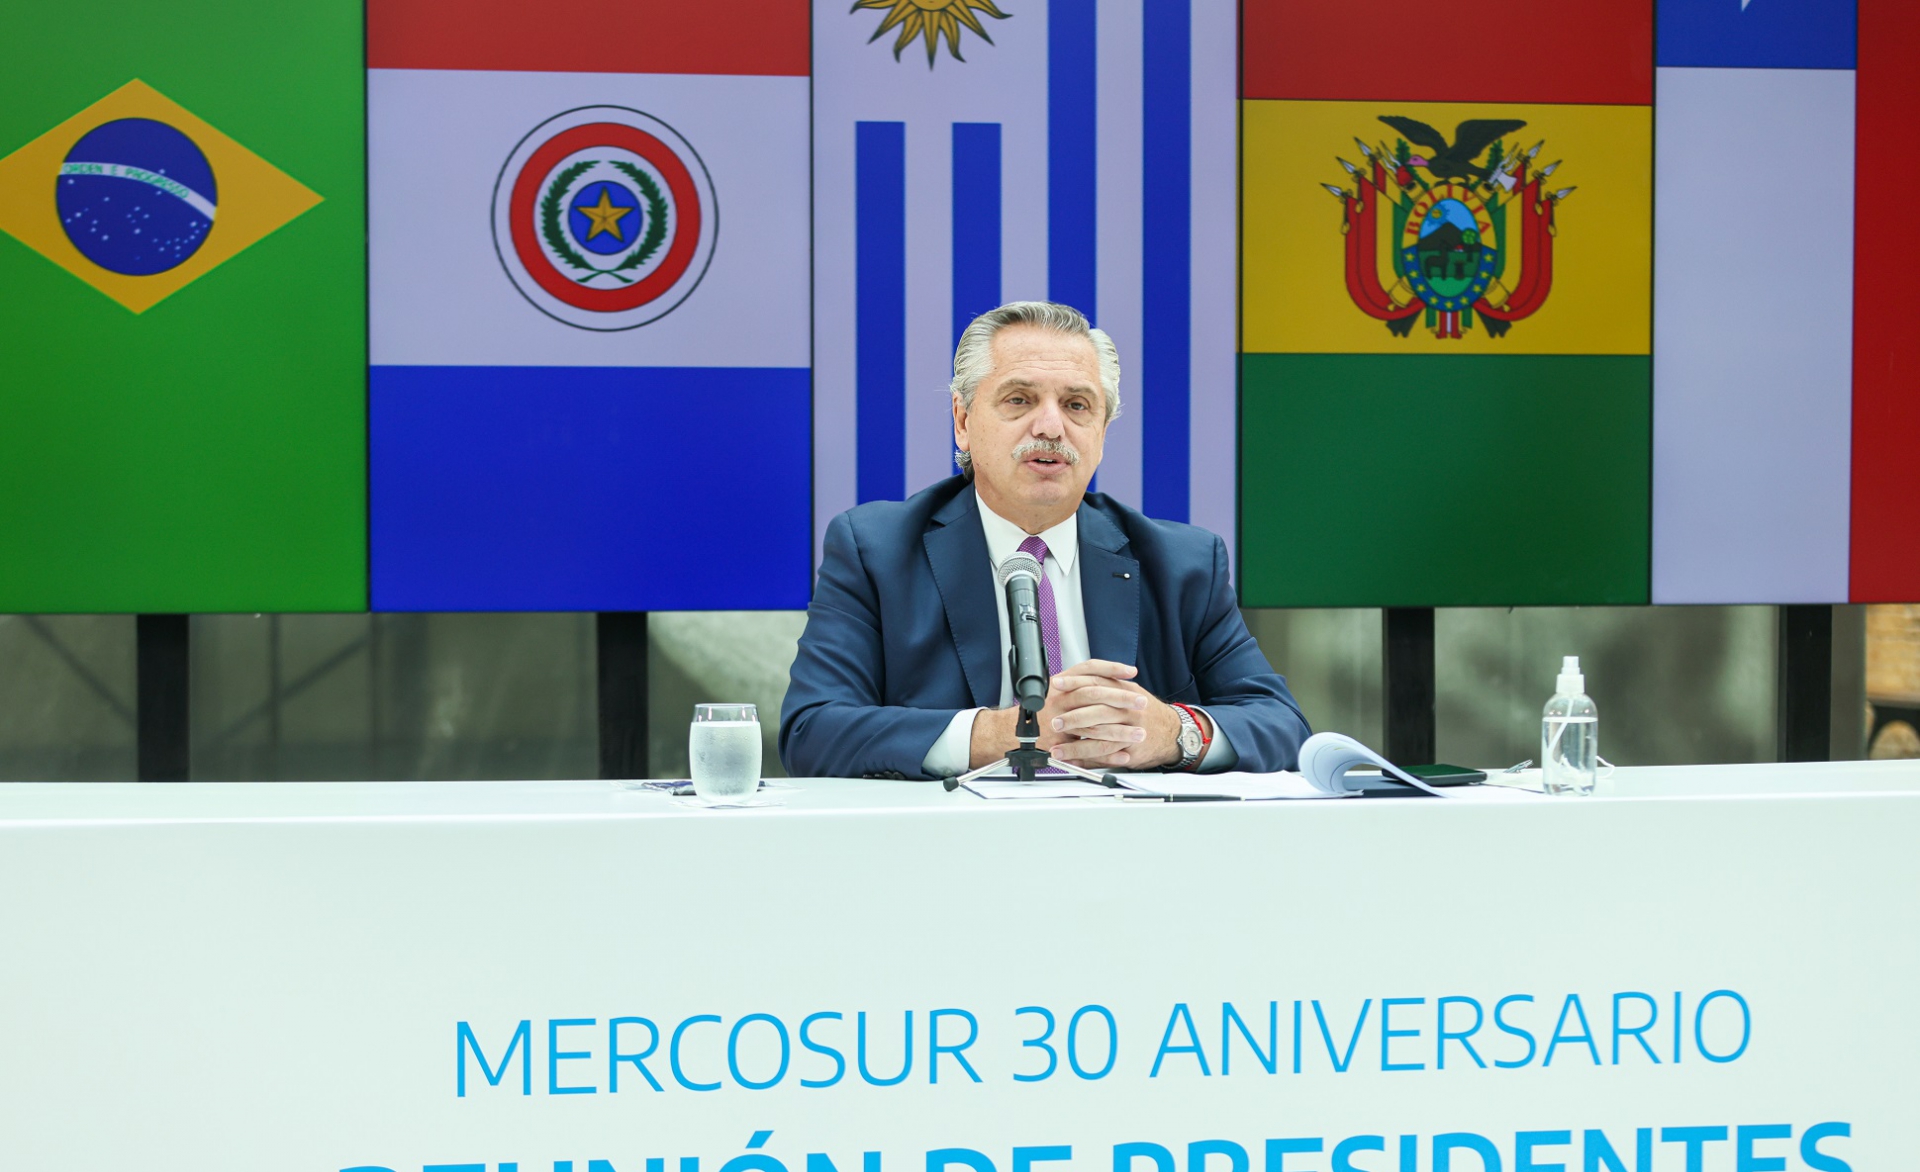 <p>Presidente da Argentina, Alberto Fernández, fala na cúpula on-line do Mercosul (imagem: presidência da Argentina)</p>
<div id="gtx-trans" style="position: absolute; left: 437px; top: 32.9965px;">
<div class="gtx-trans-icon"></div>
</div>